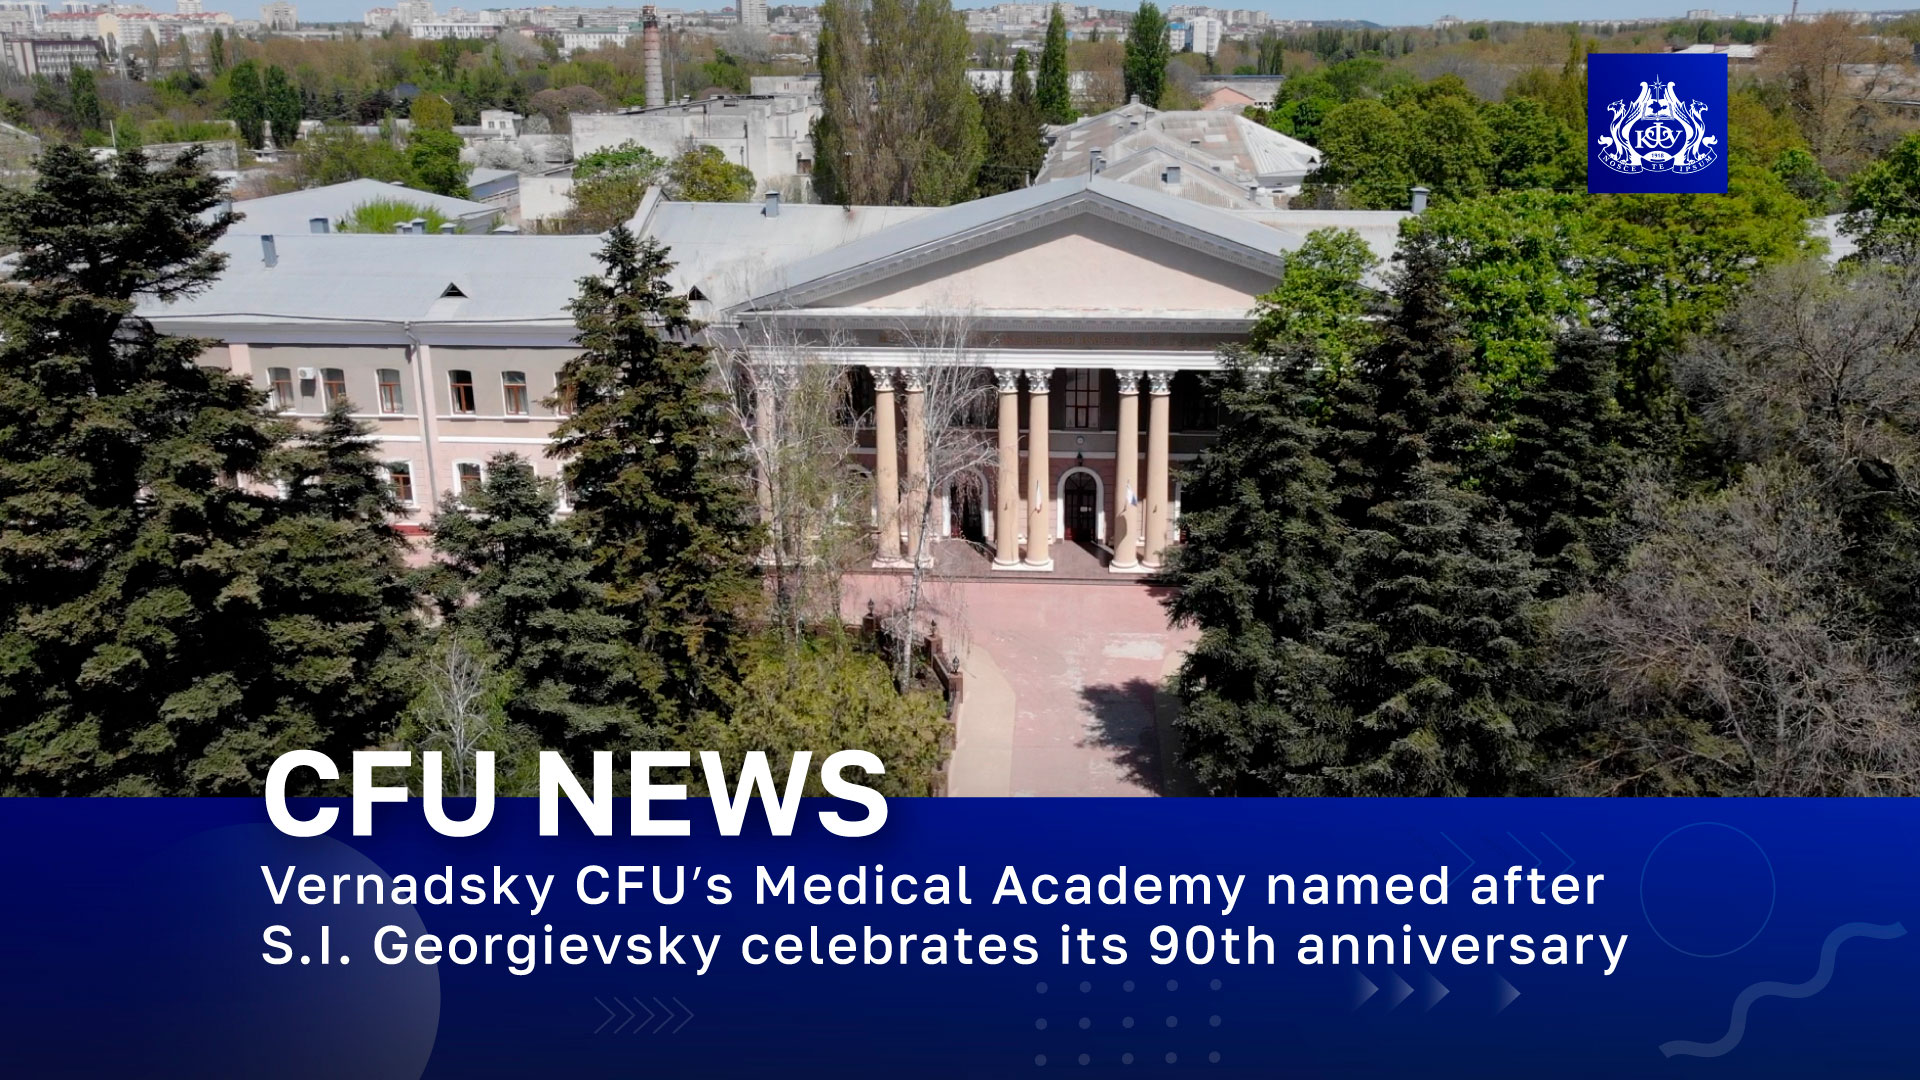 Vernadsky CFU’s Medical Academy named after S.I. Georgievsky celebrates its 90th anniversary